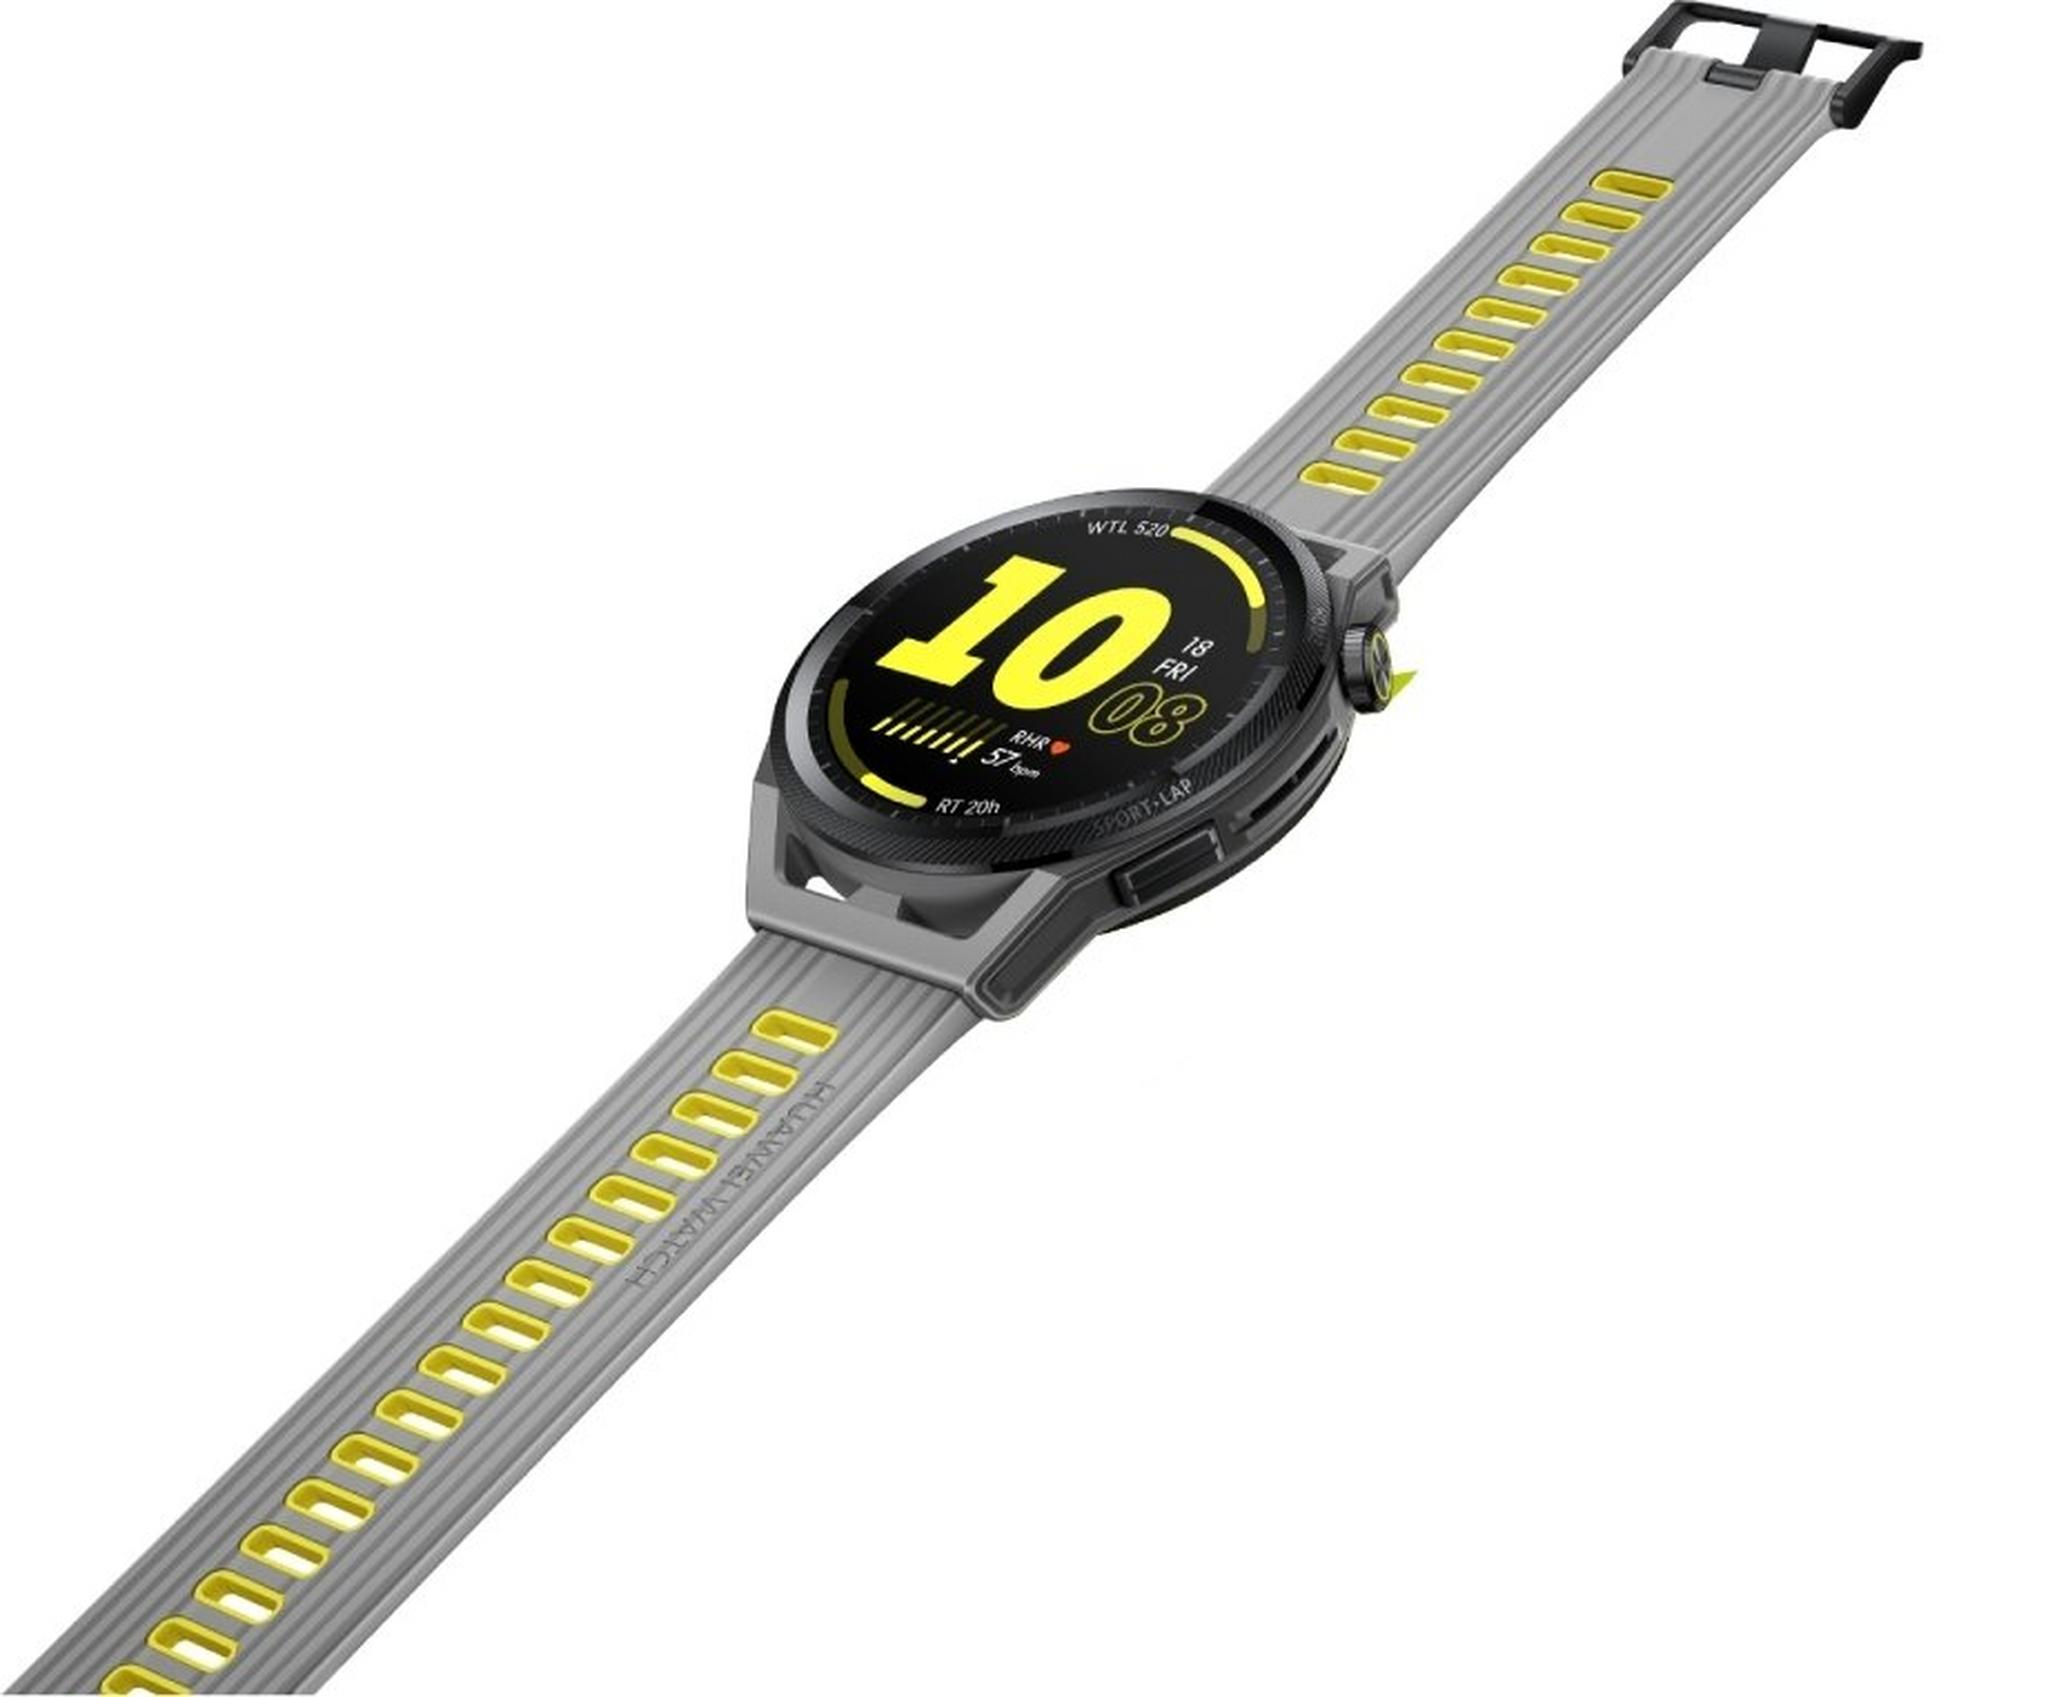 Huawei GT Runner 46mm Smart Watch - Grey